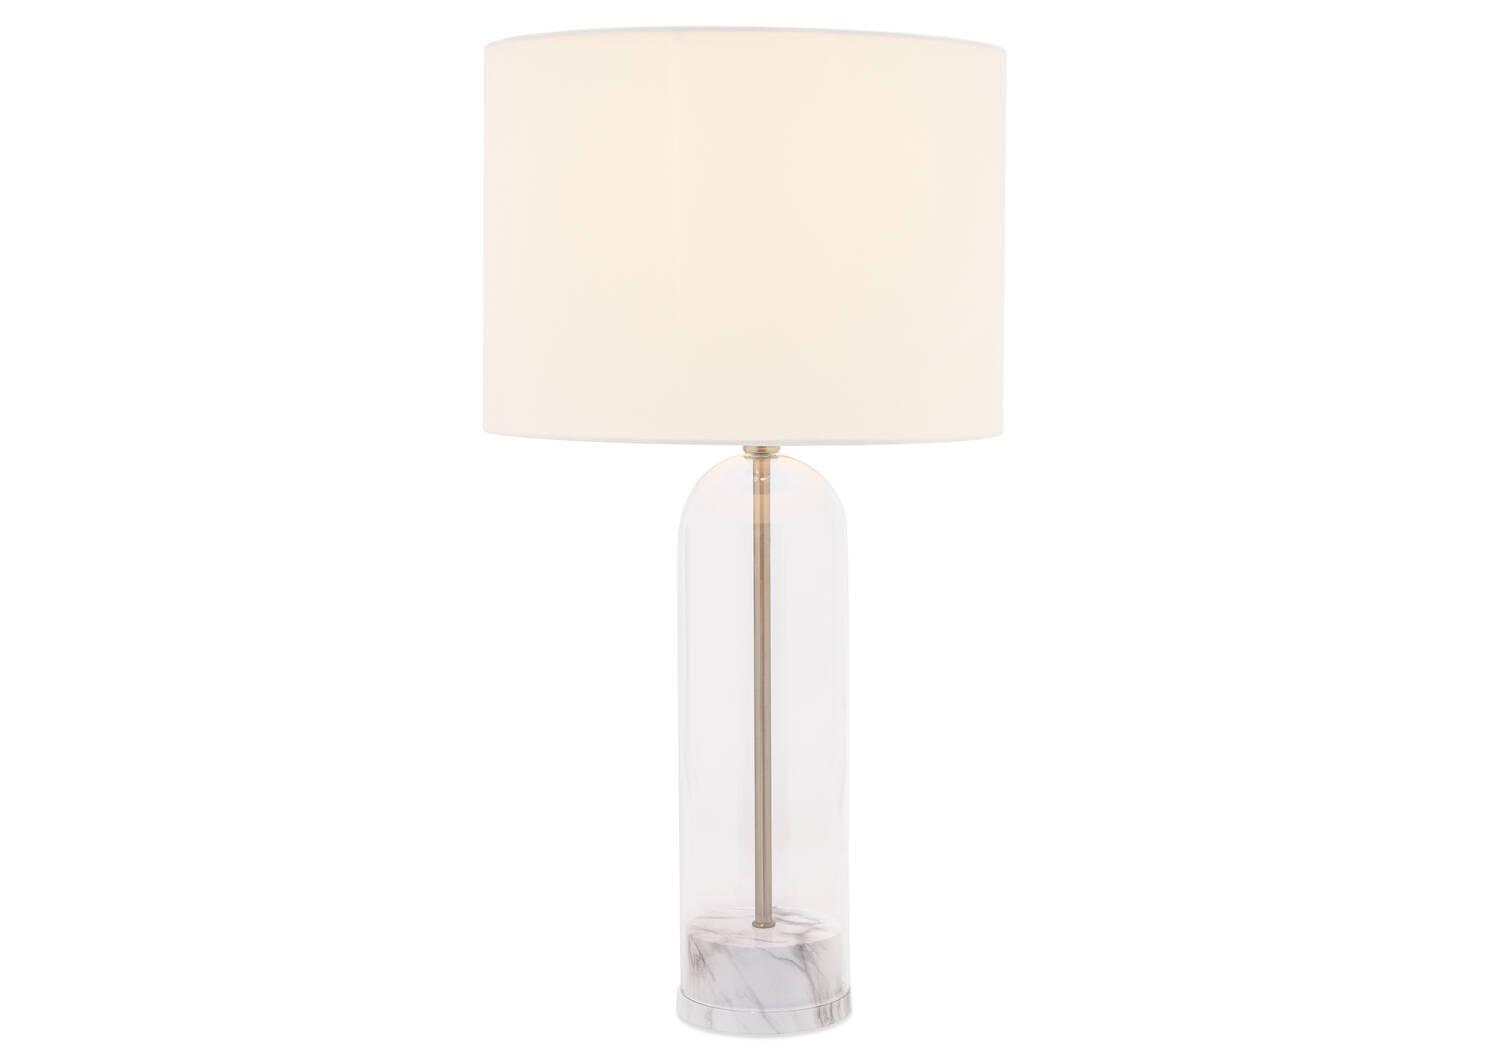 Clarent Table Lamp